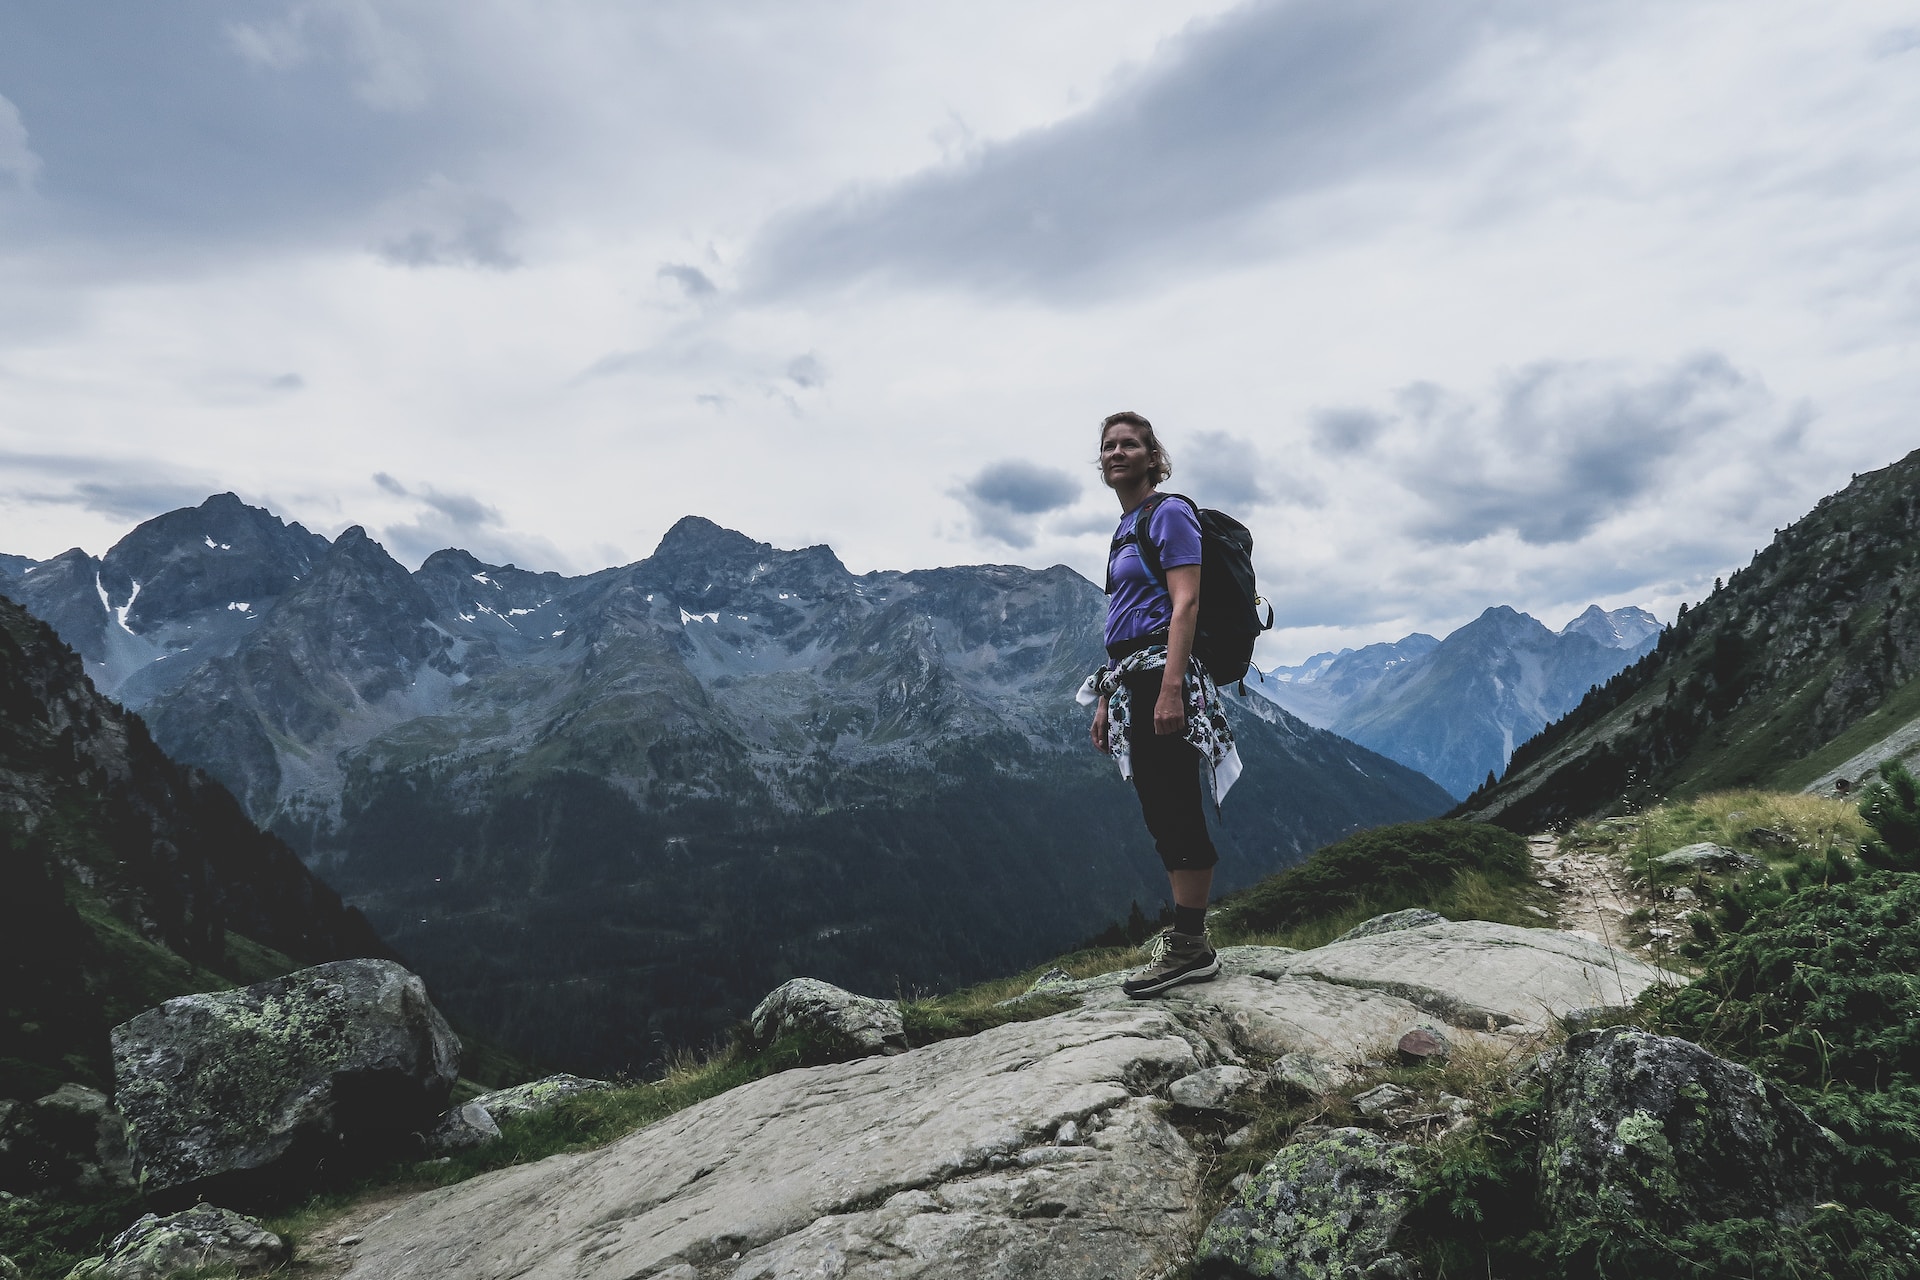 Lady in hiking gear walking up an Alps mountain